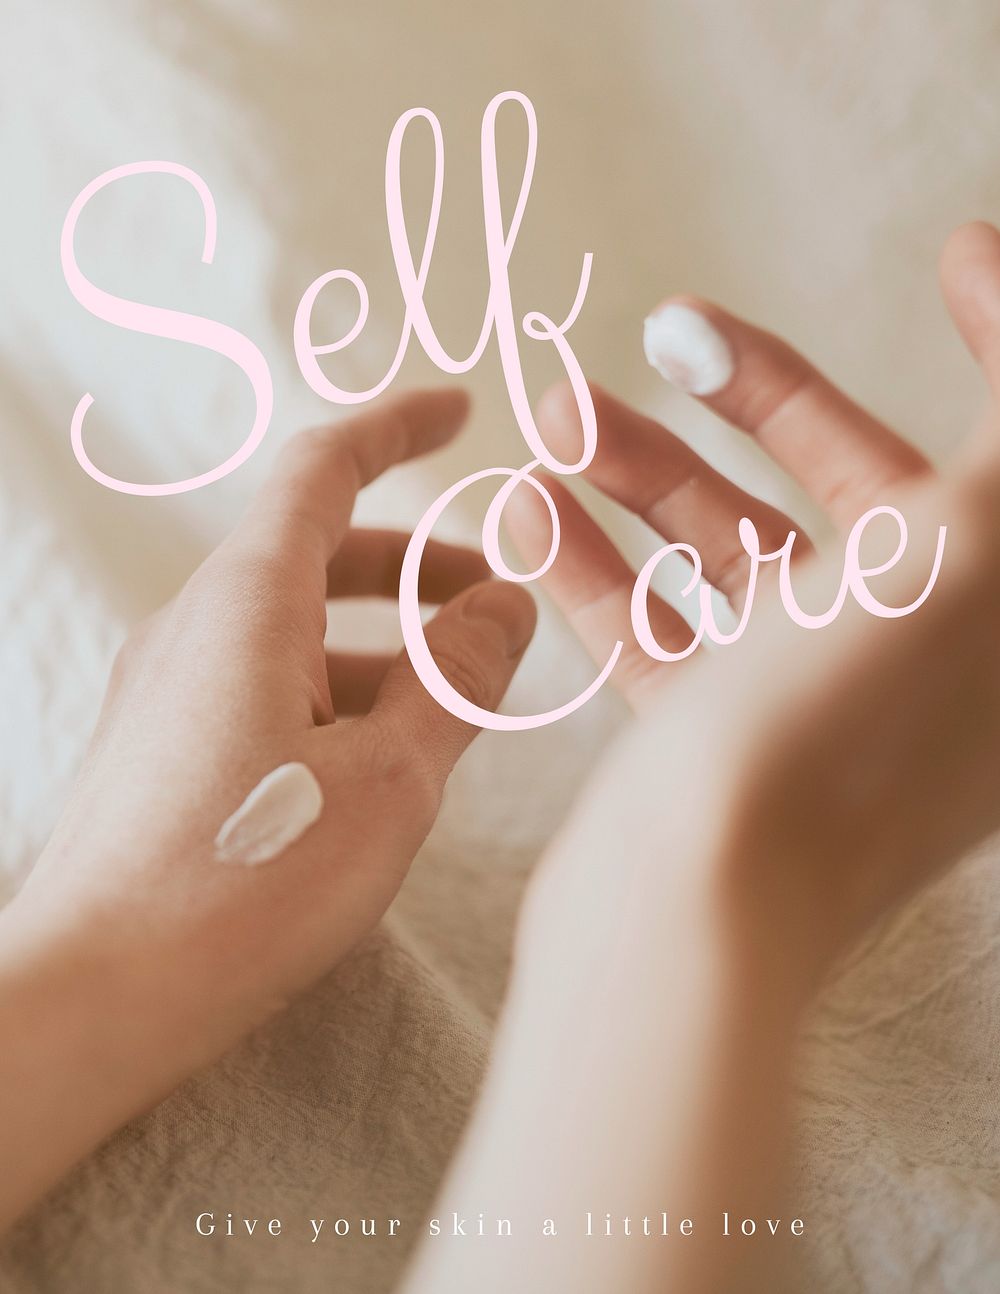 Self care flyer template